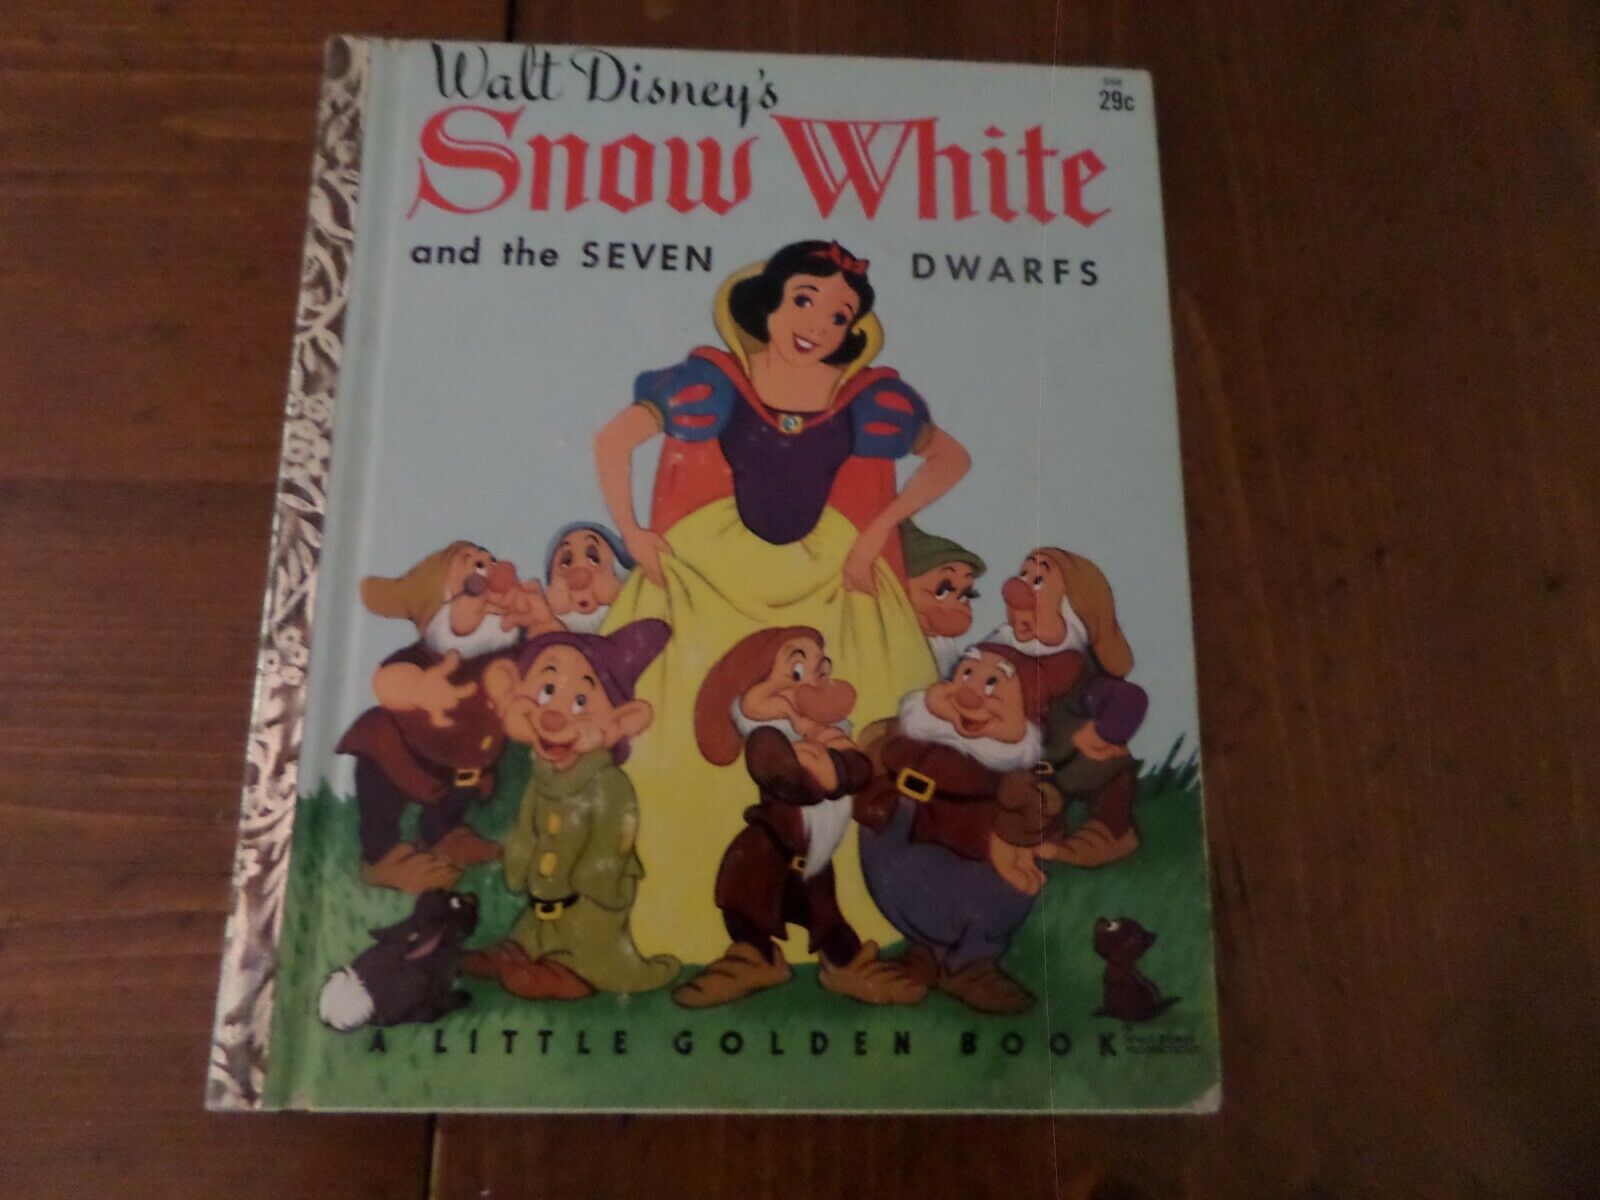 Snow White And The Seven Dwarfs, A Little Golden Book,1948(vintage Disney)